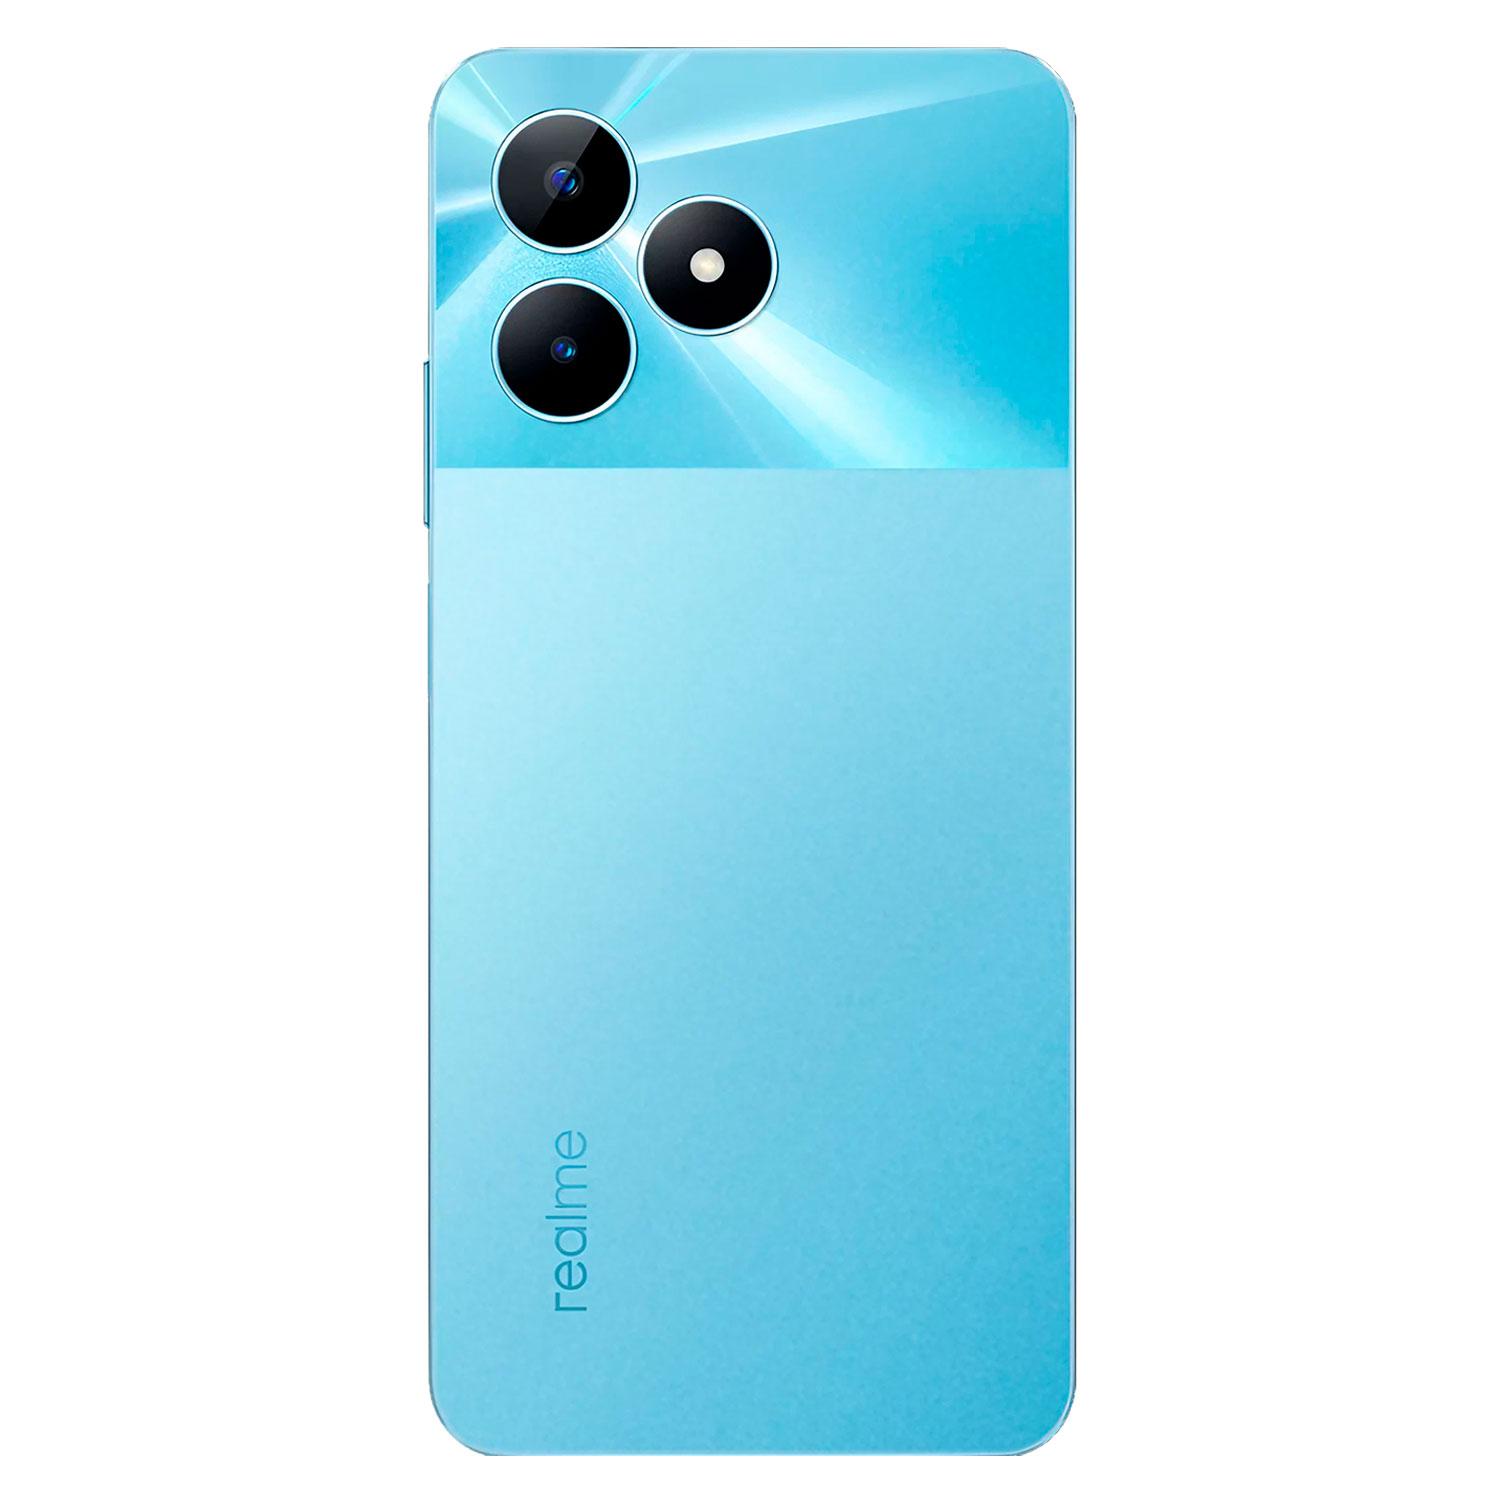 Smartphone Realme Note 50 RMX3834 64GB 3GB RAM Dual SIM Tela 6.74" - Azul (Anatel)